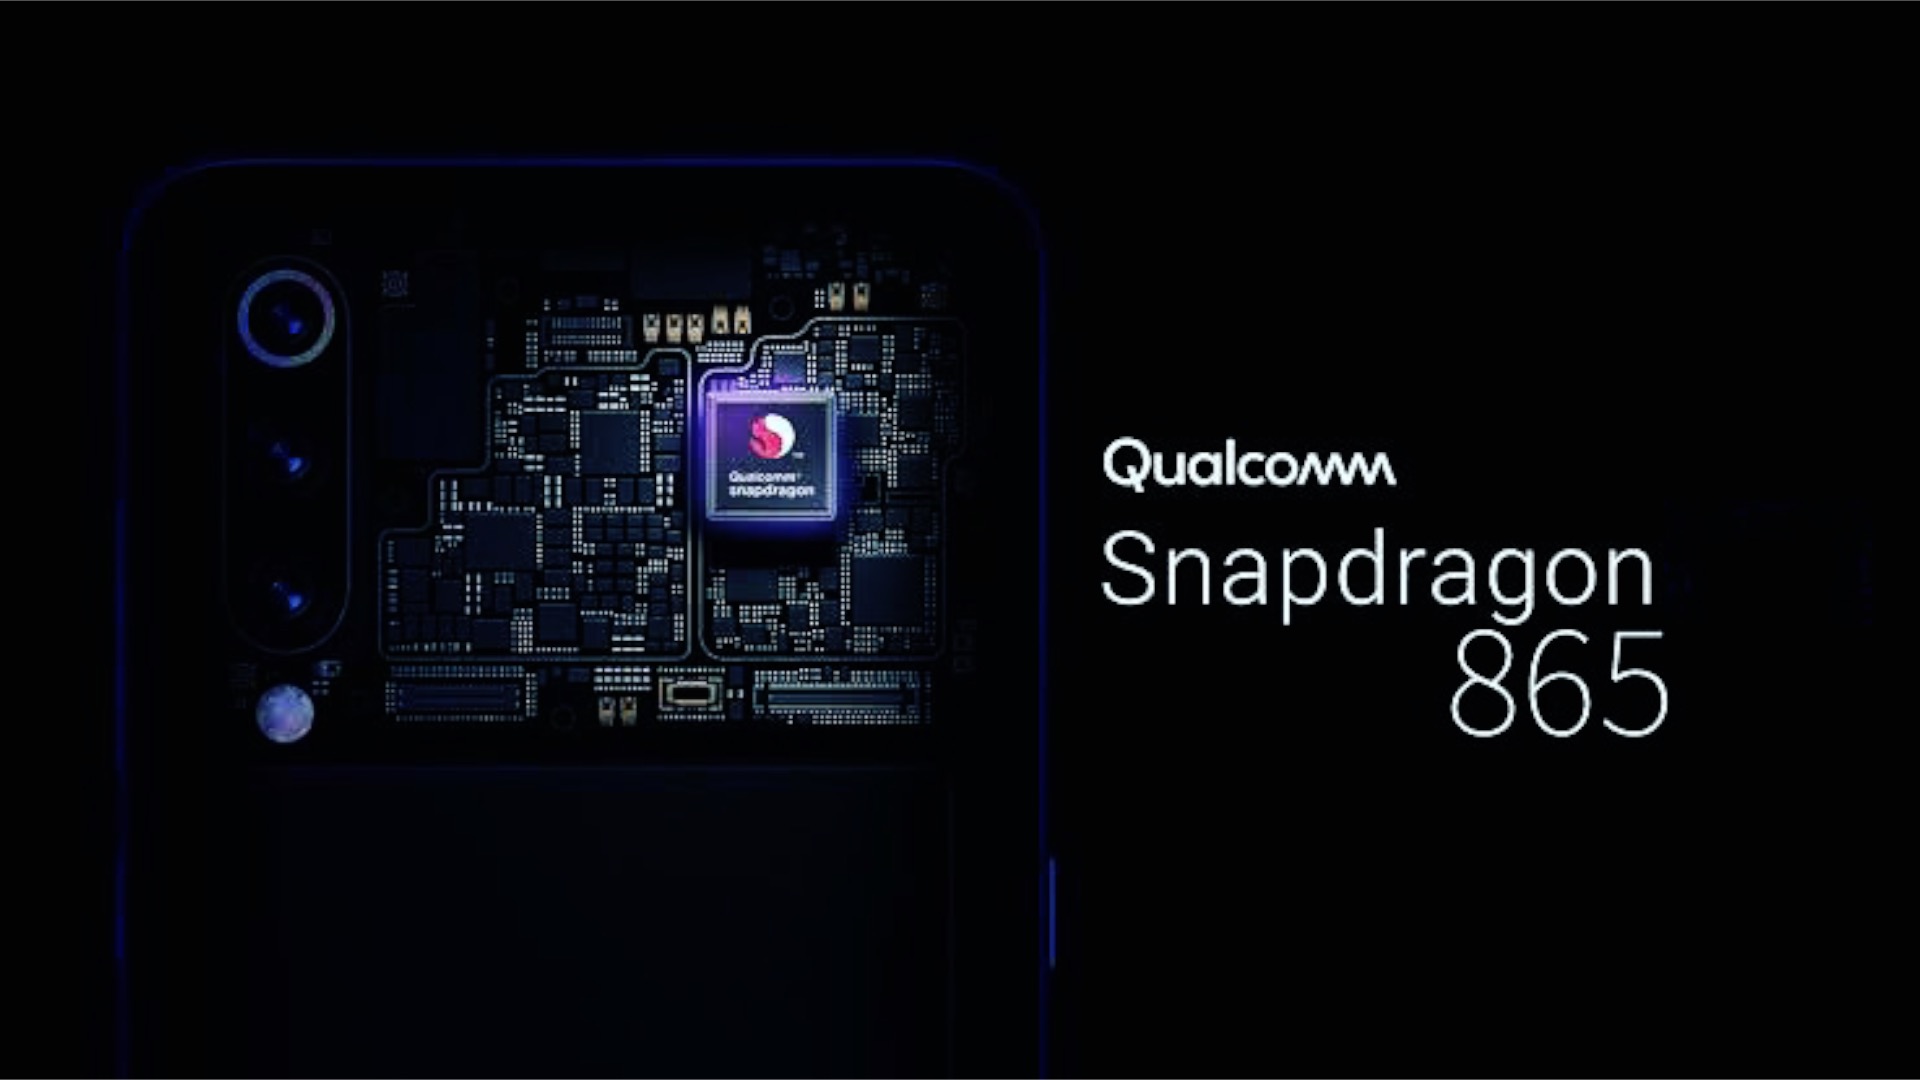 Qualcomm Snapdragon 865 5G